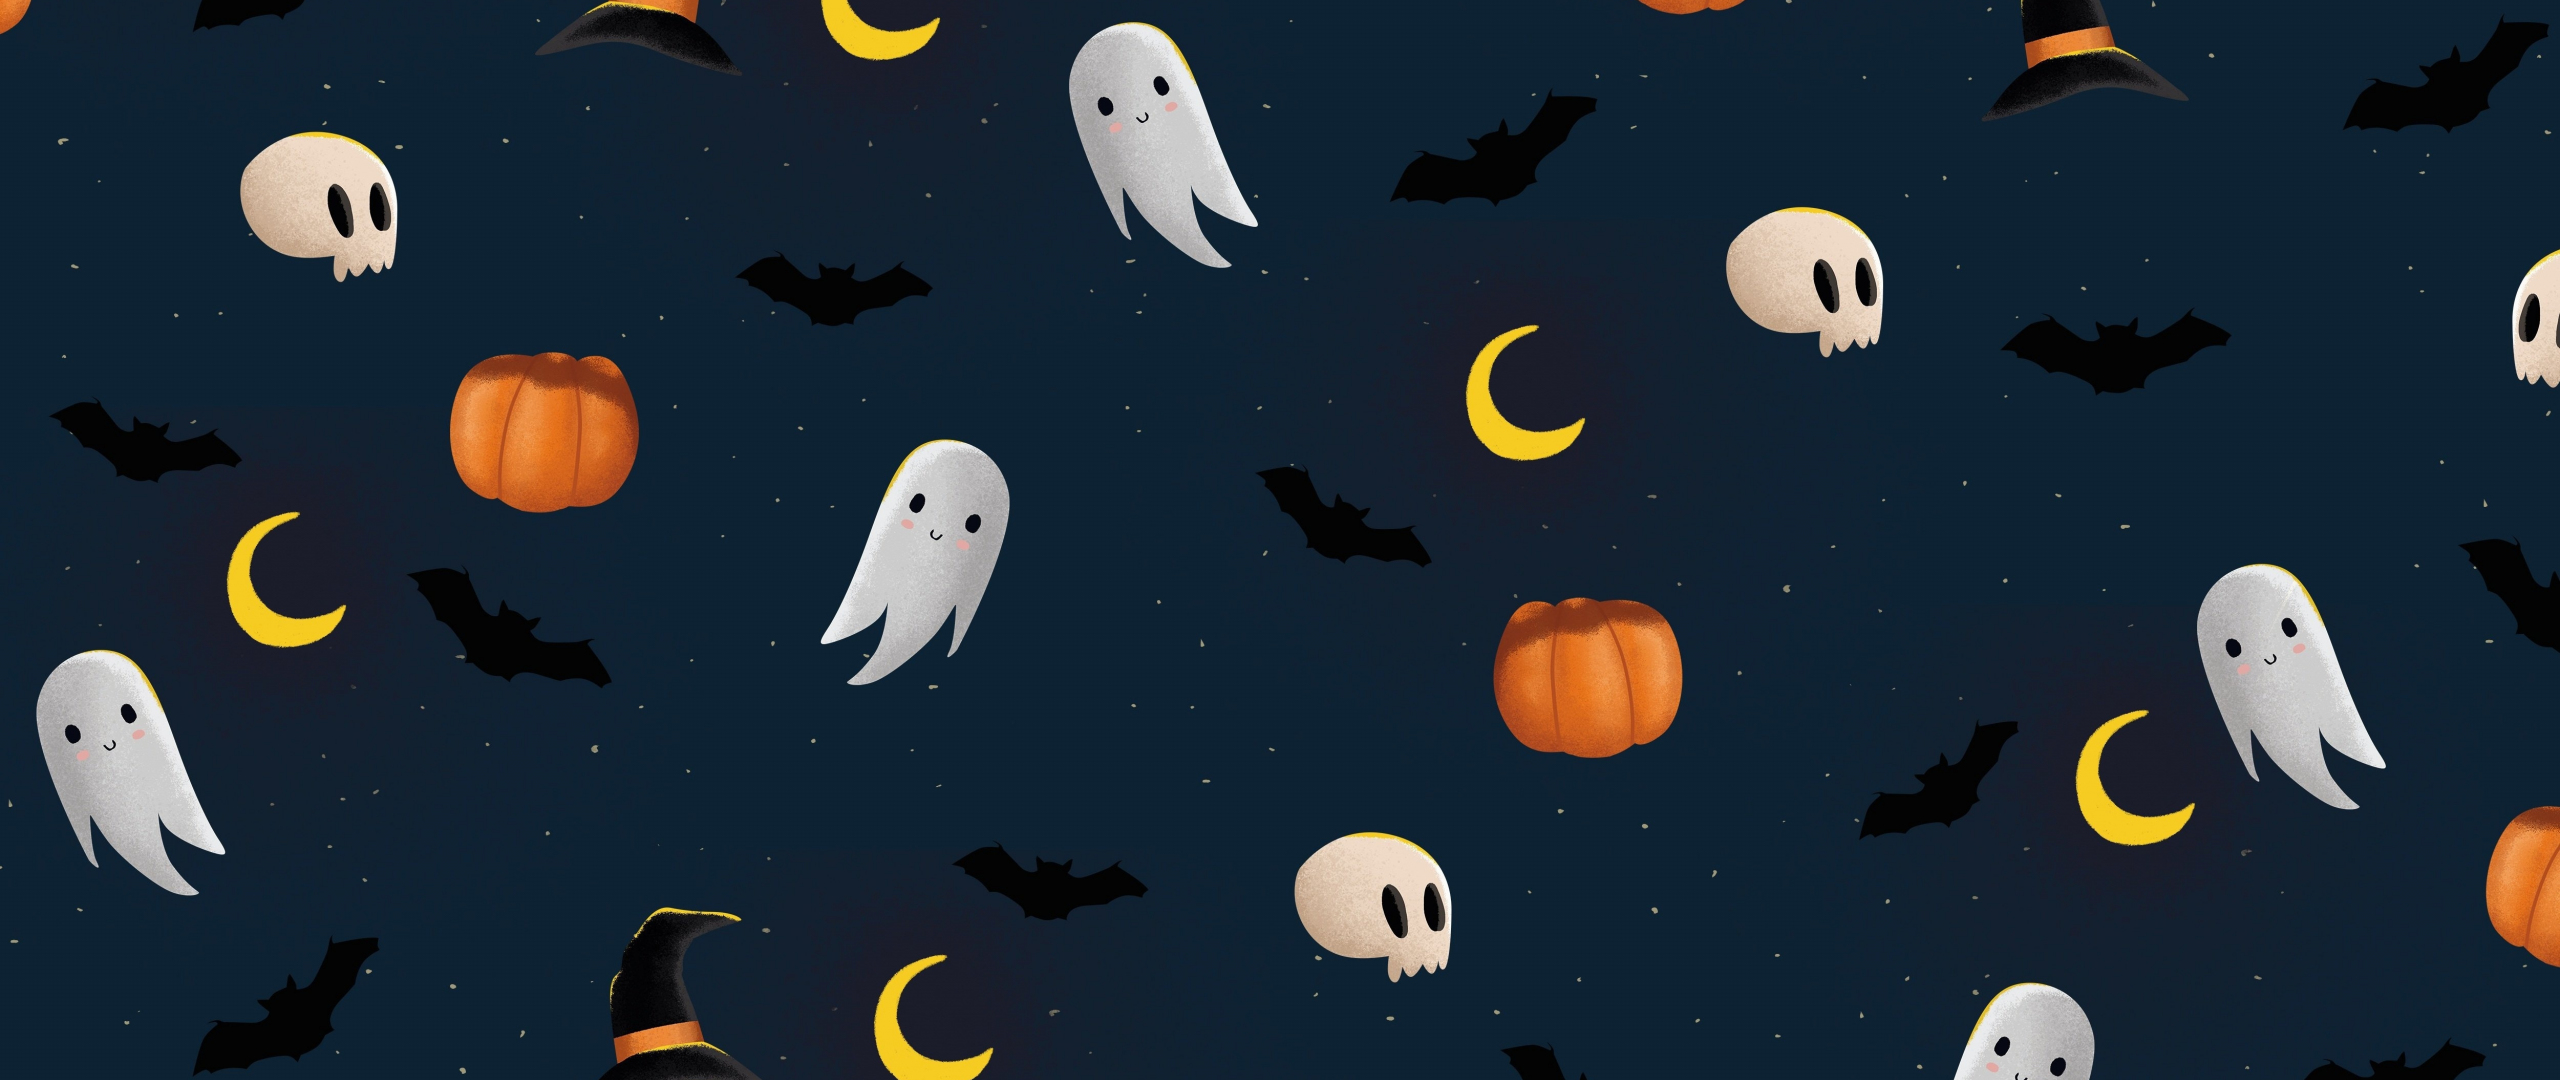 Download 2560x1080 wallpaper ghosts and pumpkins, halloween, art, dual wide, widescreen, 2560x1080 HD image, background, 27118